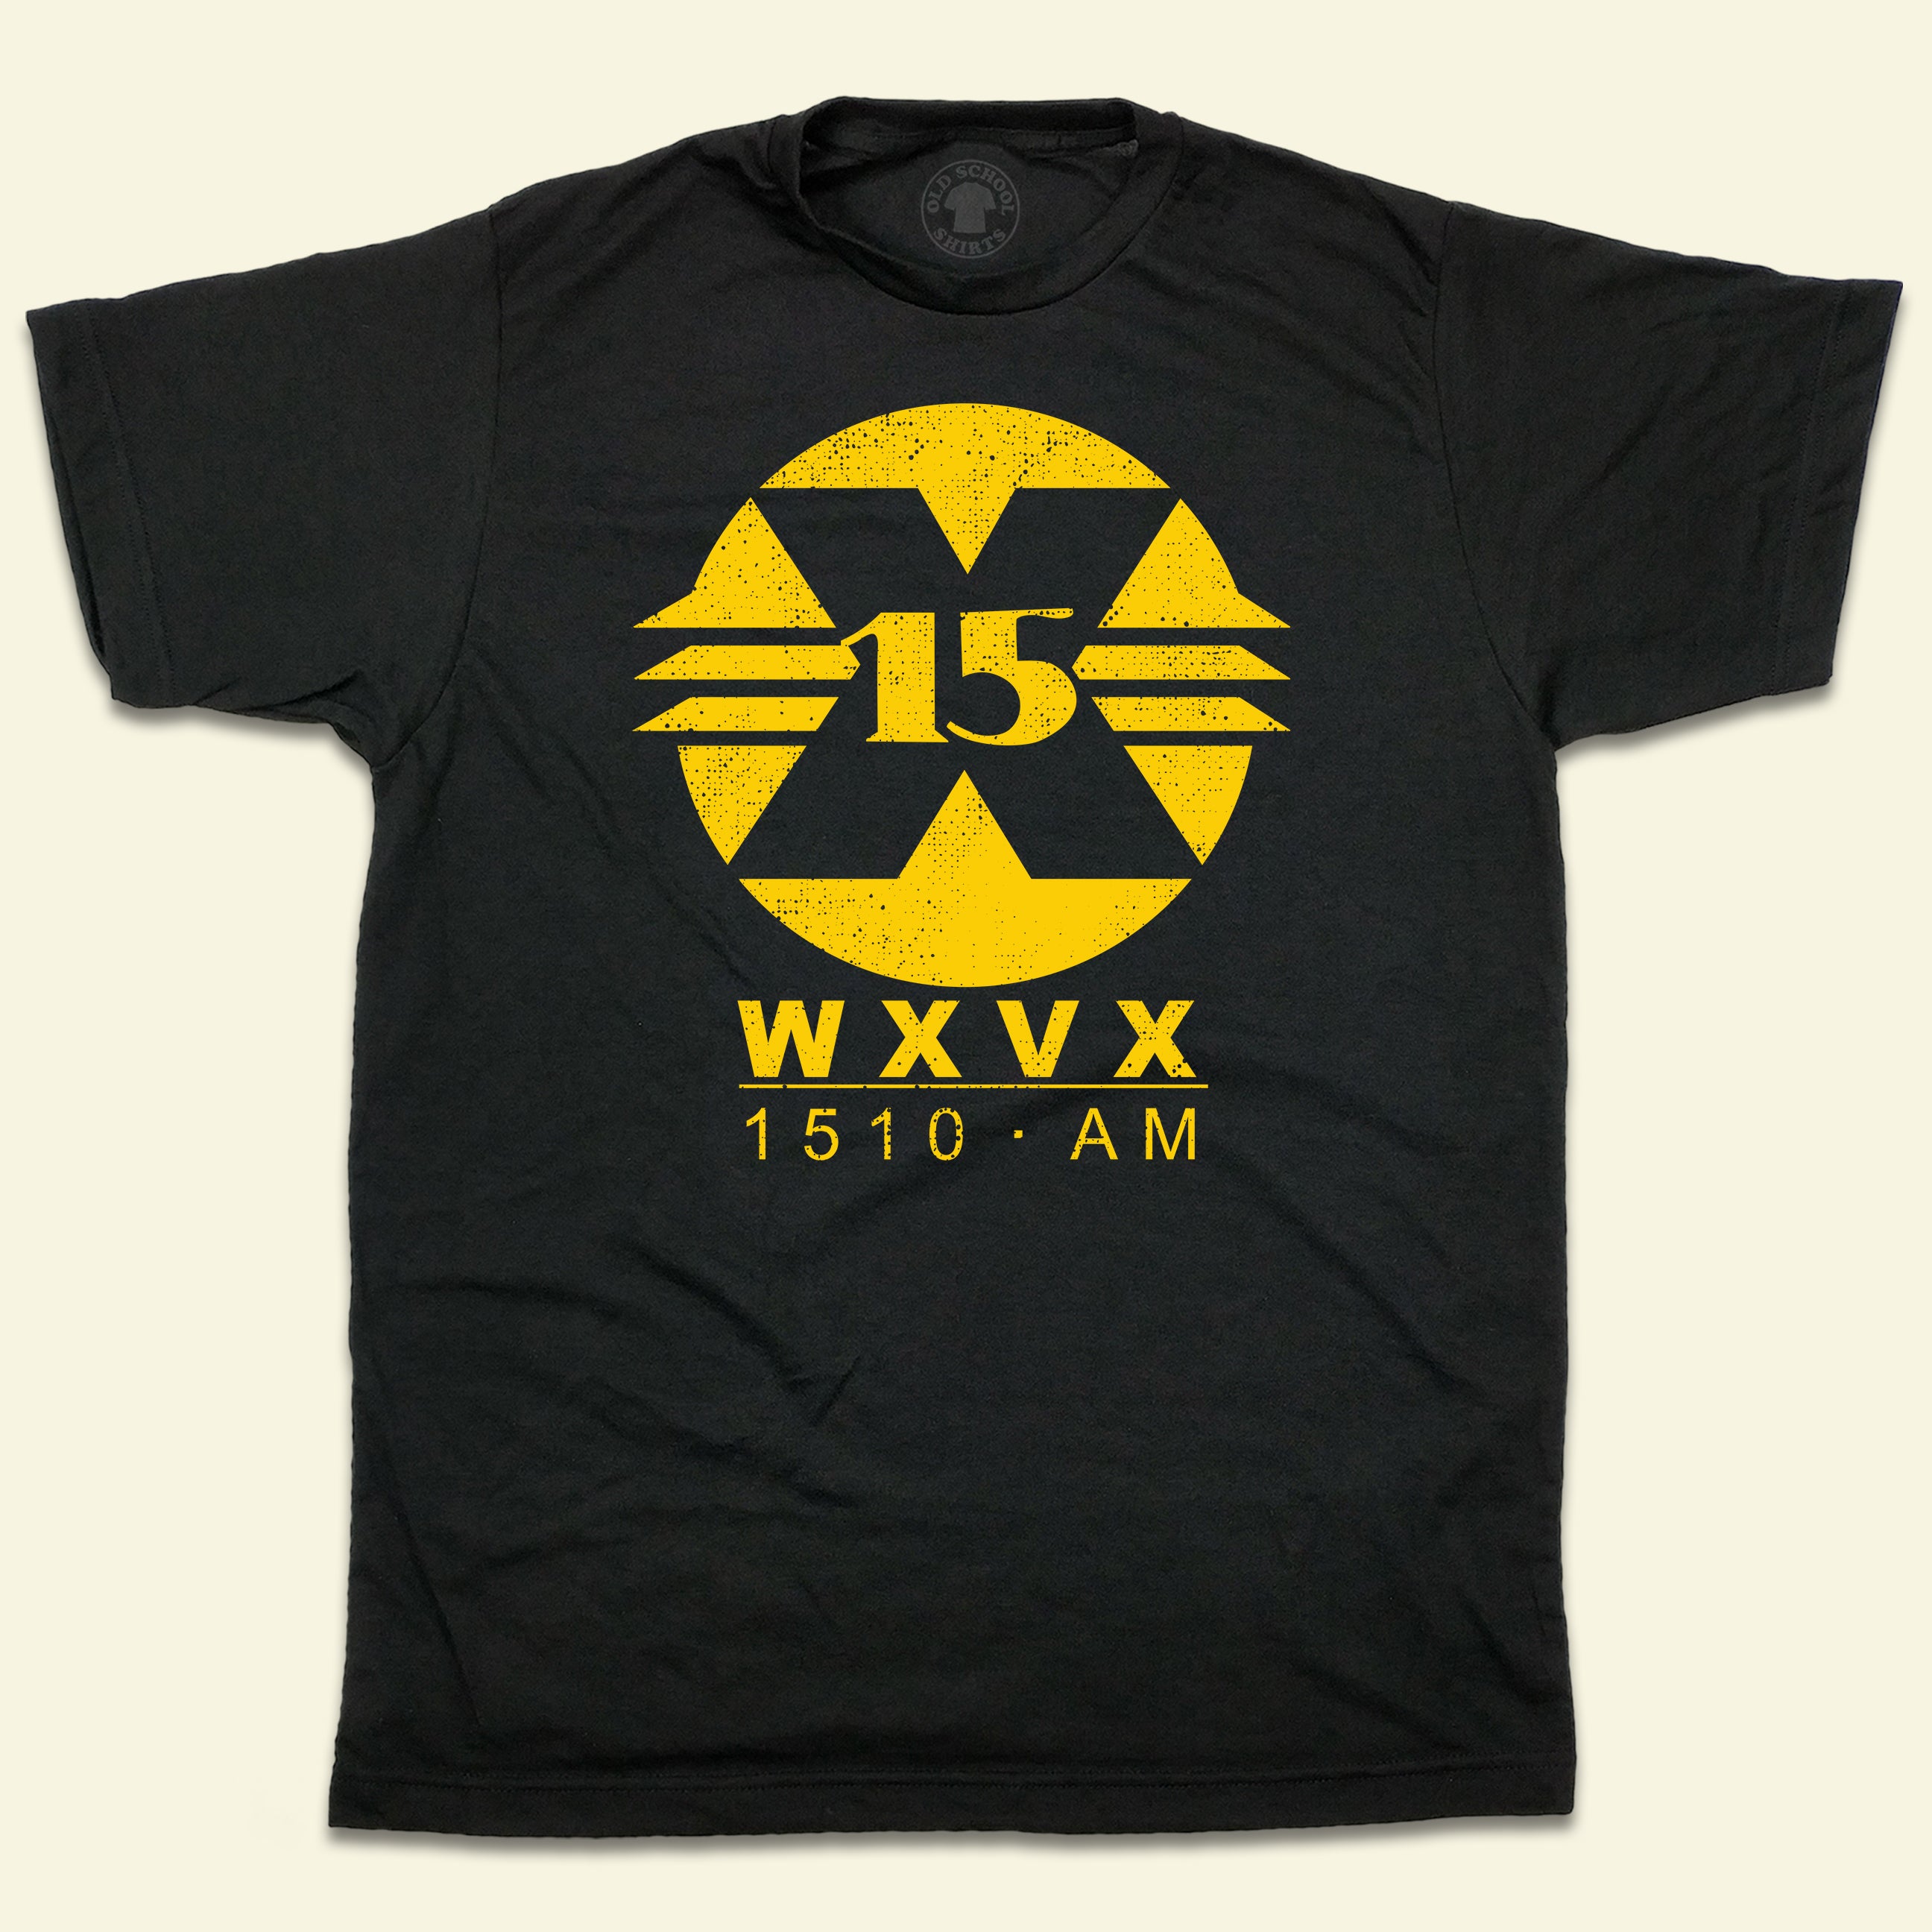 WXVX "X15" 1510 AM Radio